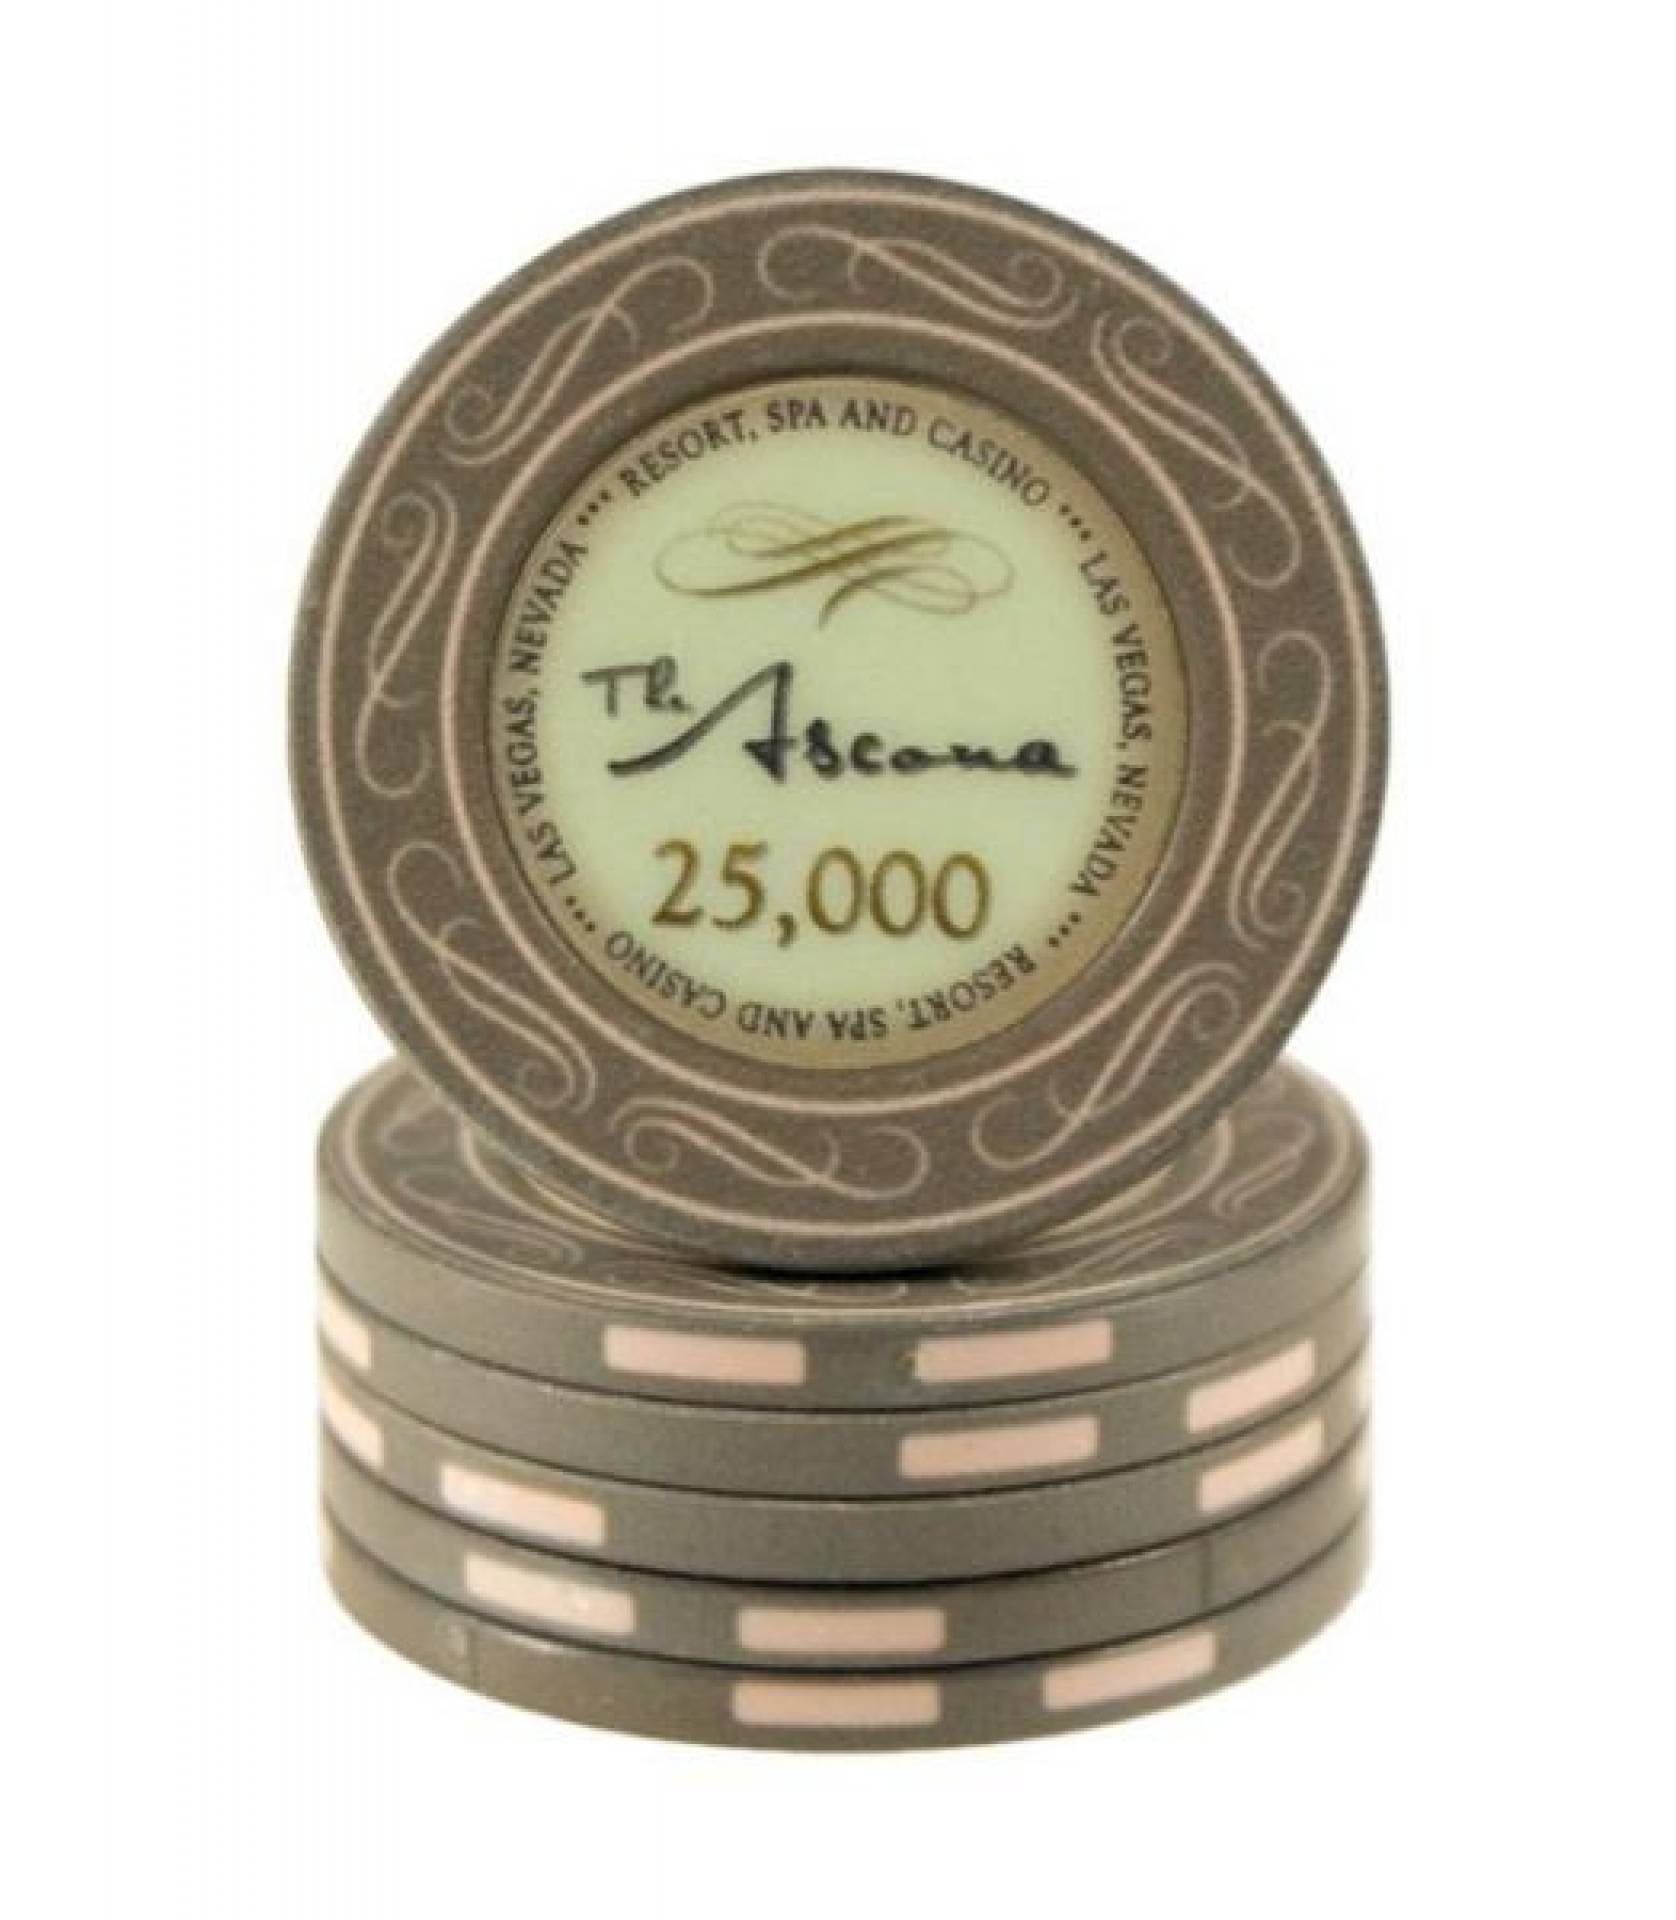 Poker chip The Ascona - hodnota 25.000